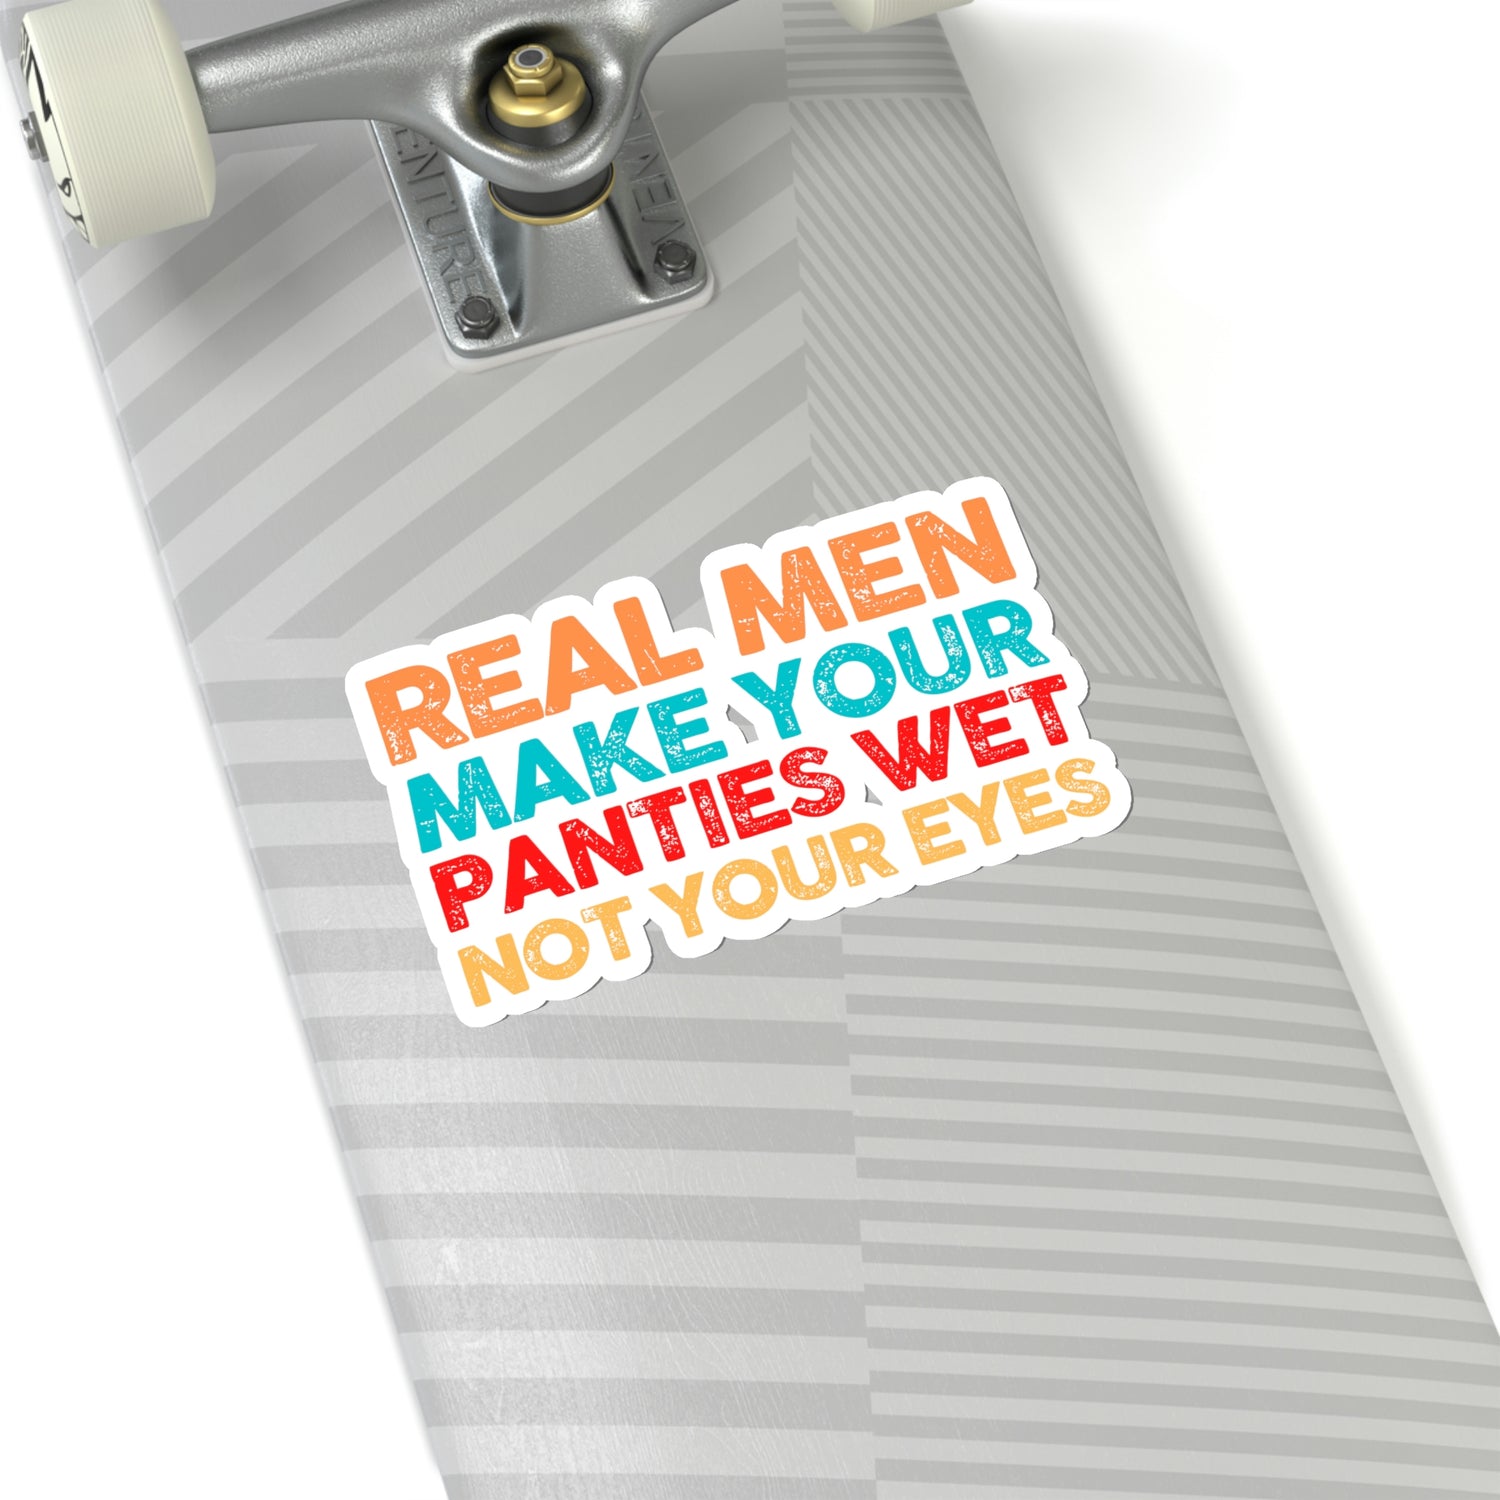 Real Men Make Your Panties Wet Not Your Eyes' Sticker